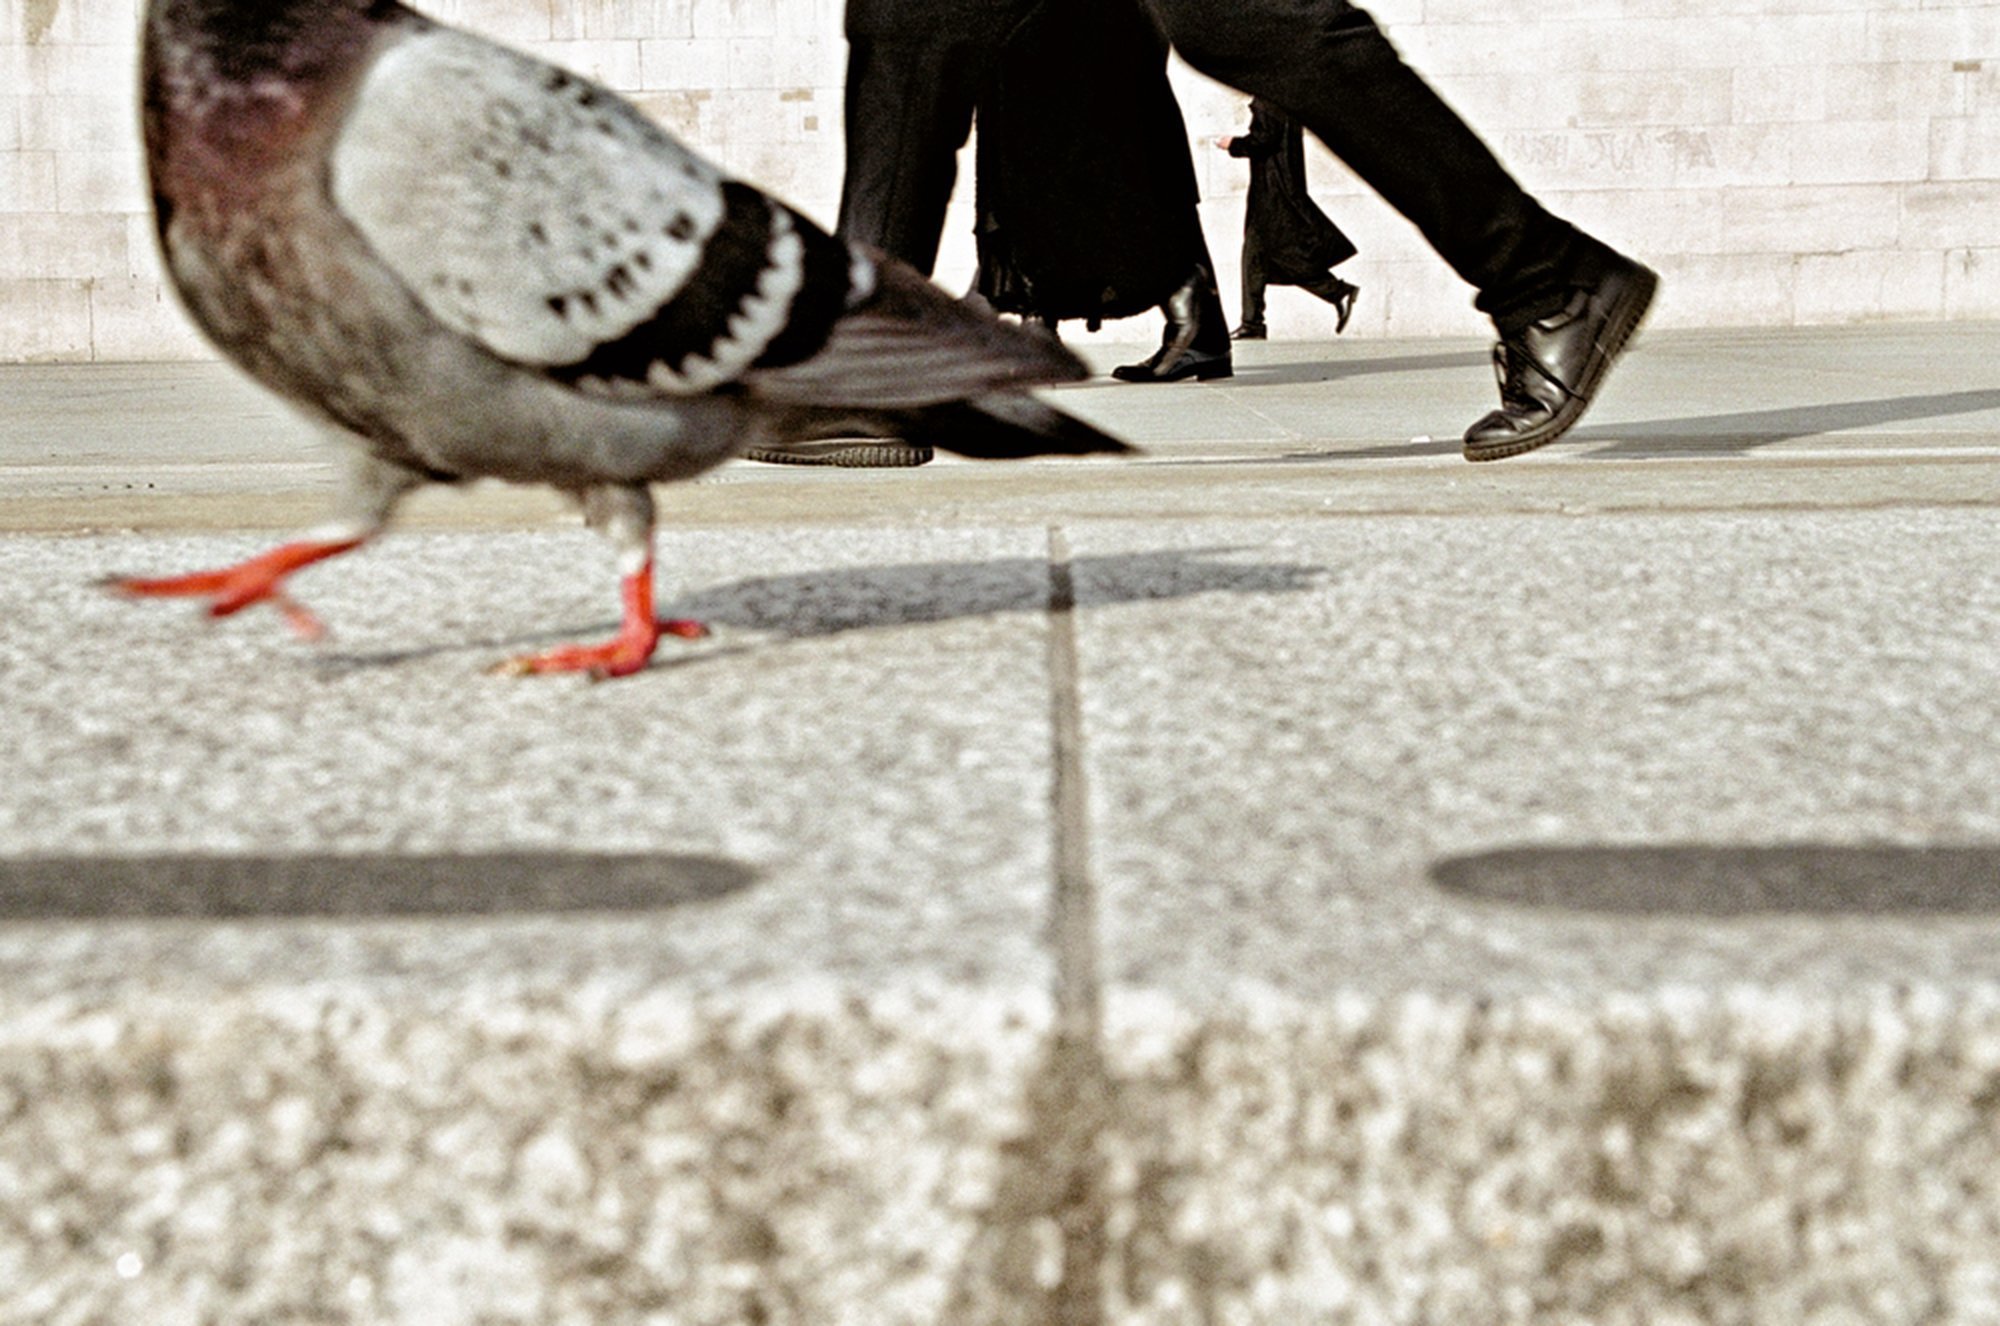 "The pigeon (Trafalgar Square 2004)" by Matt Stuart